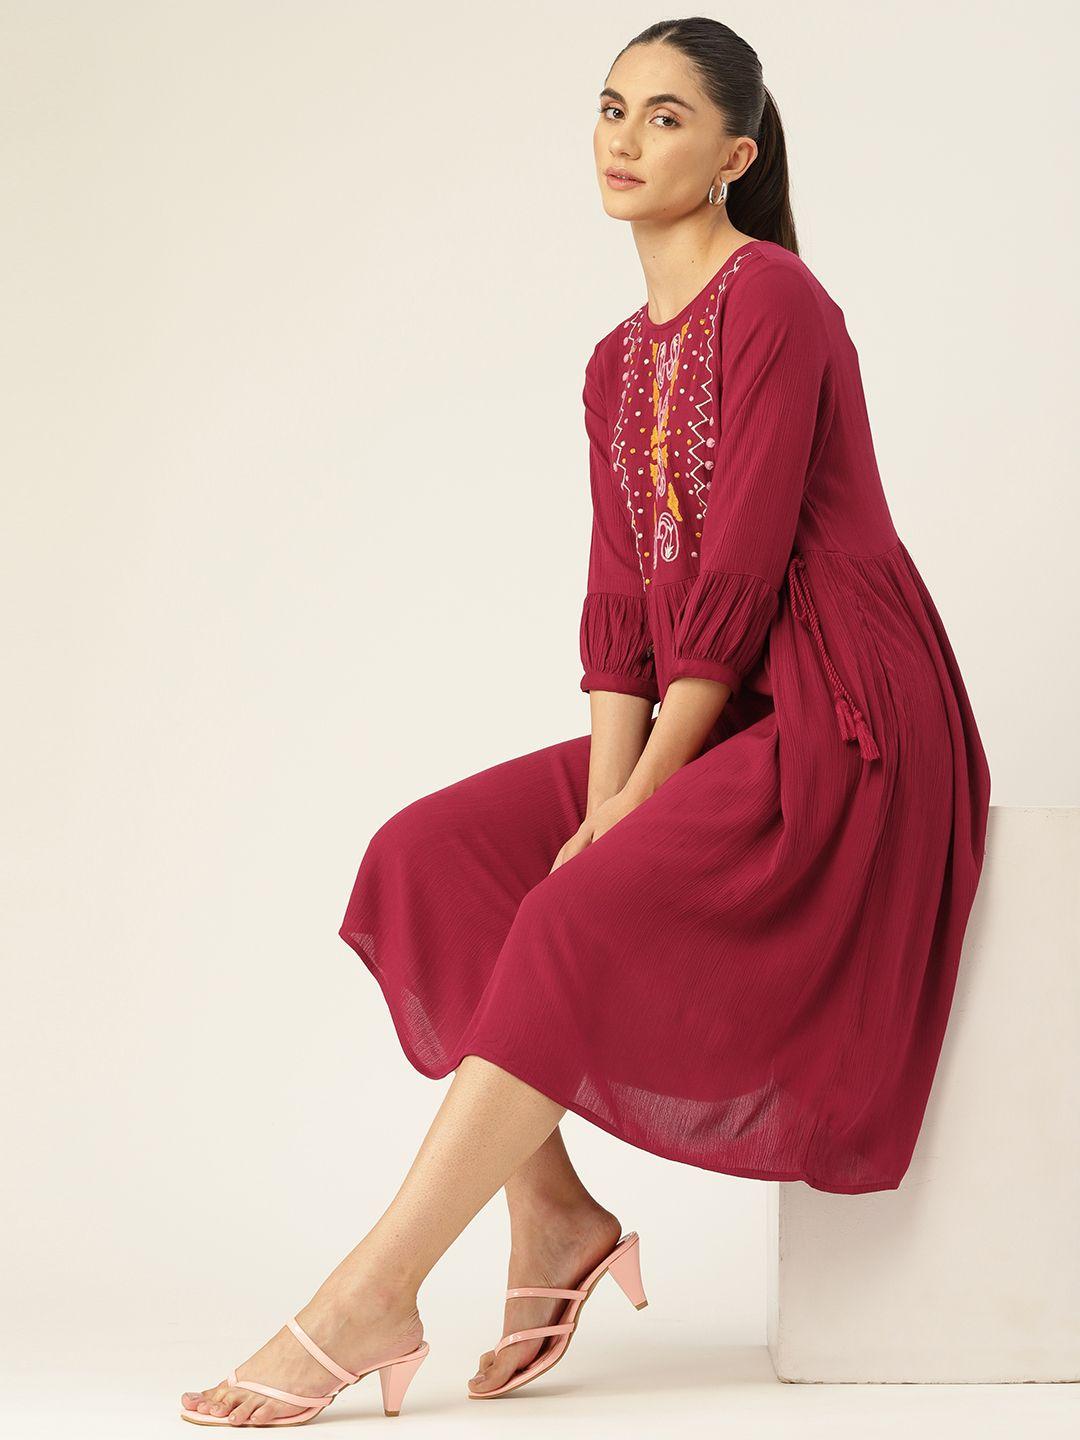 dressberry red floral yoke design a-line dress